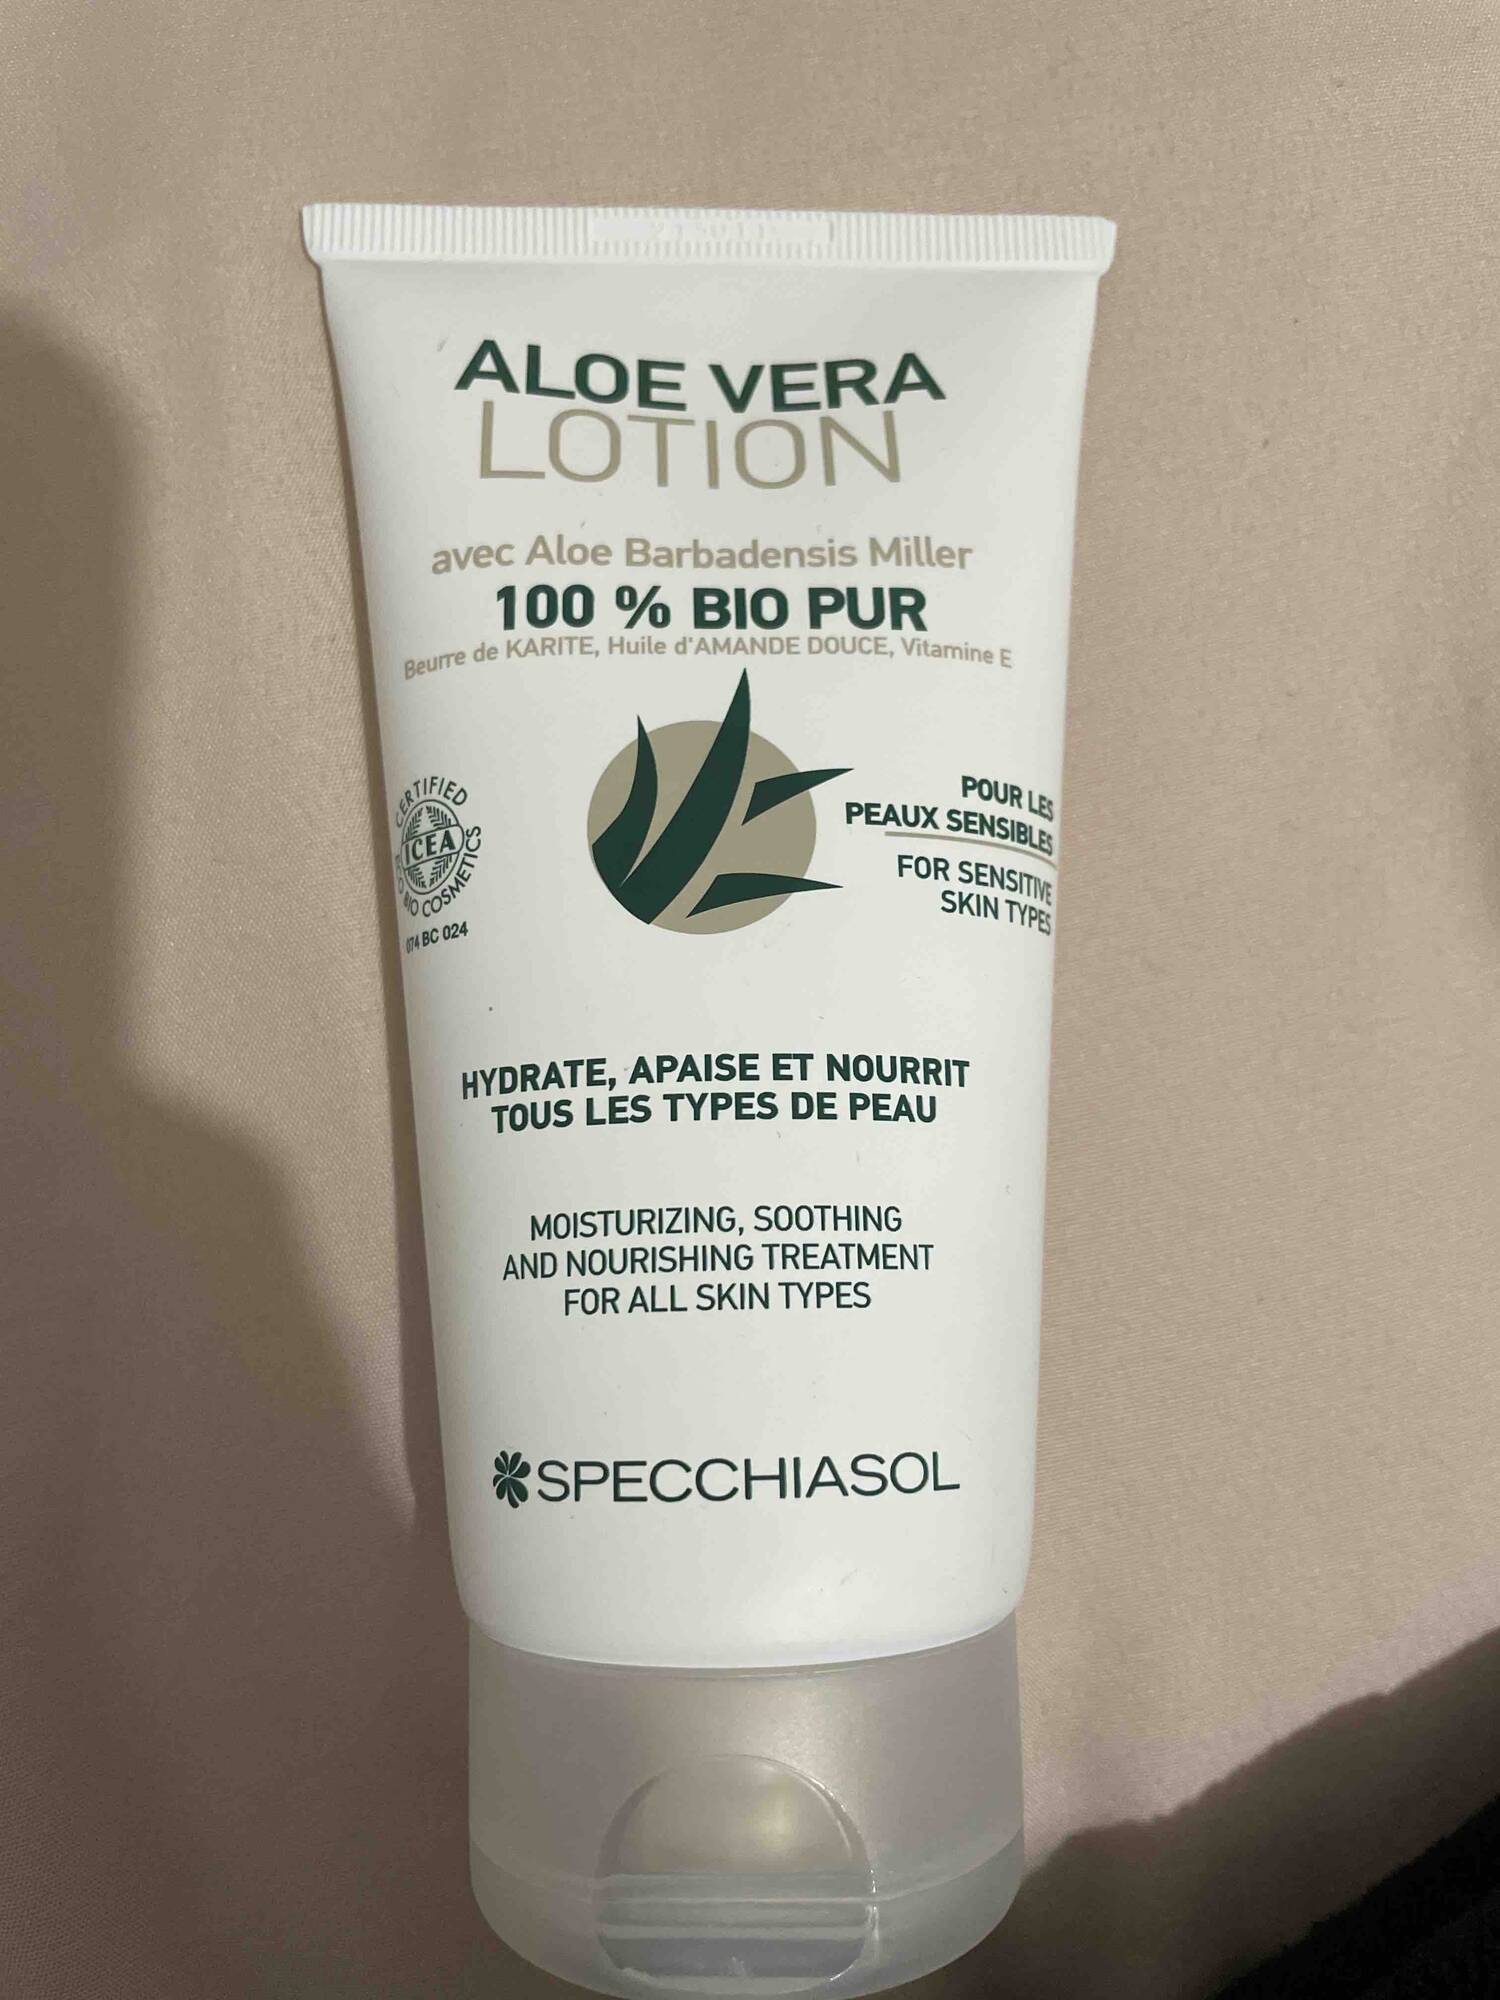 SPECCHIASOL - Aloe vera lotion 100% bio pur